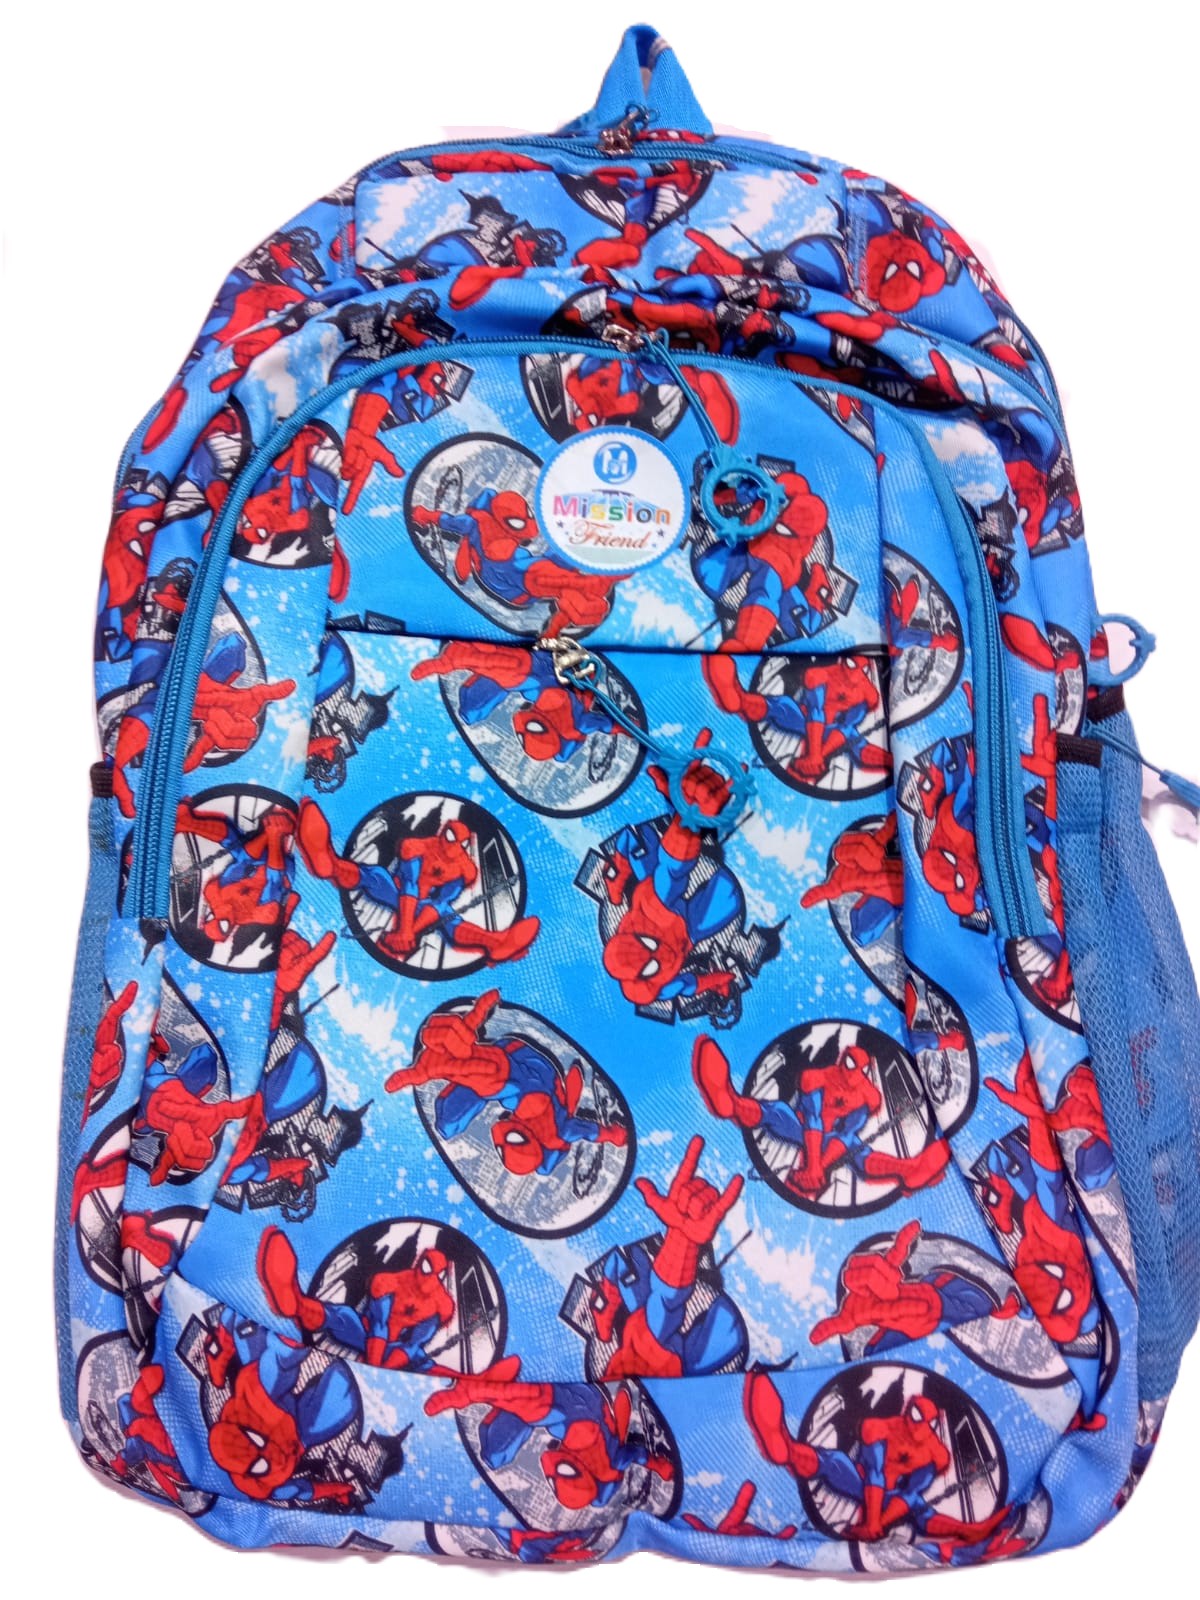 Spiderman School Bag